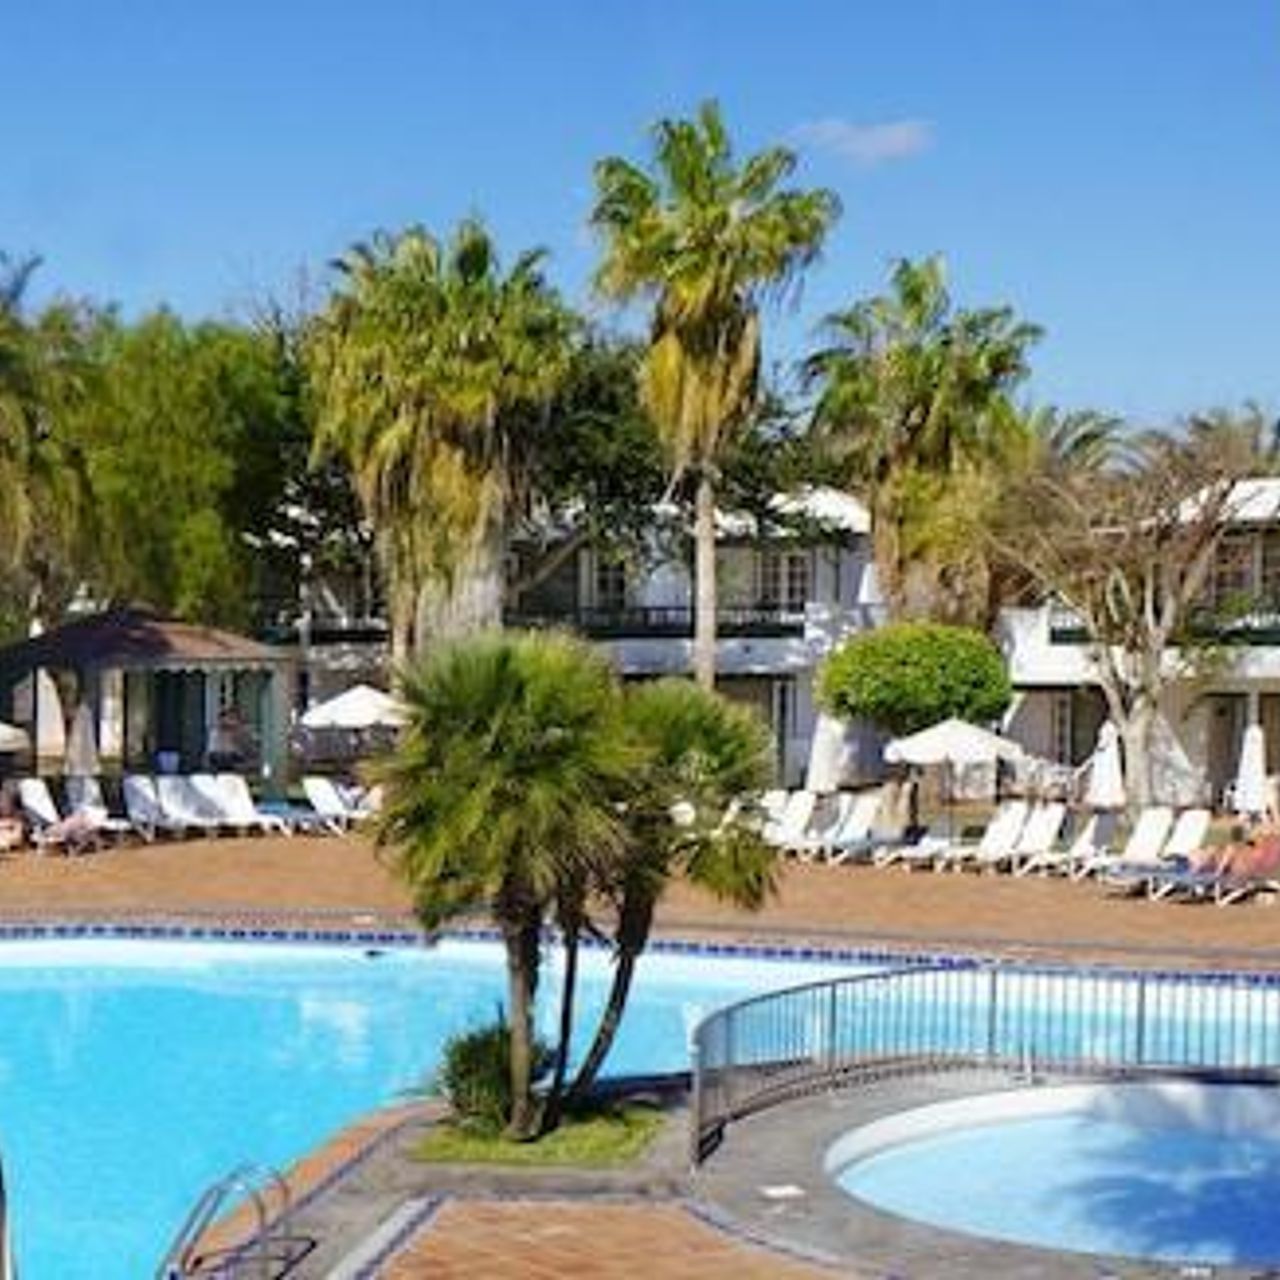 Hotel Barcarola Club en Islas Canarias - HOTEL INFO